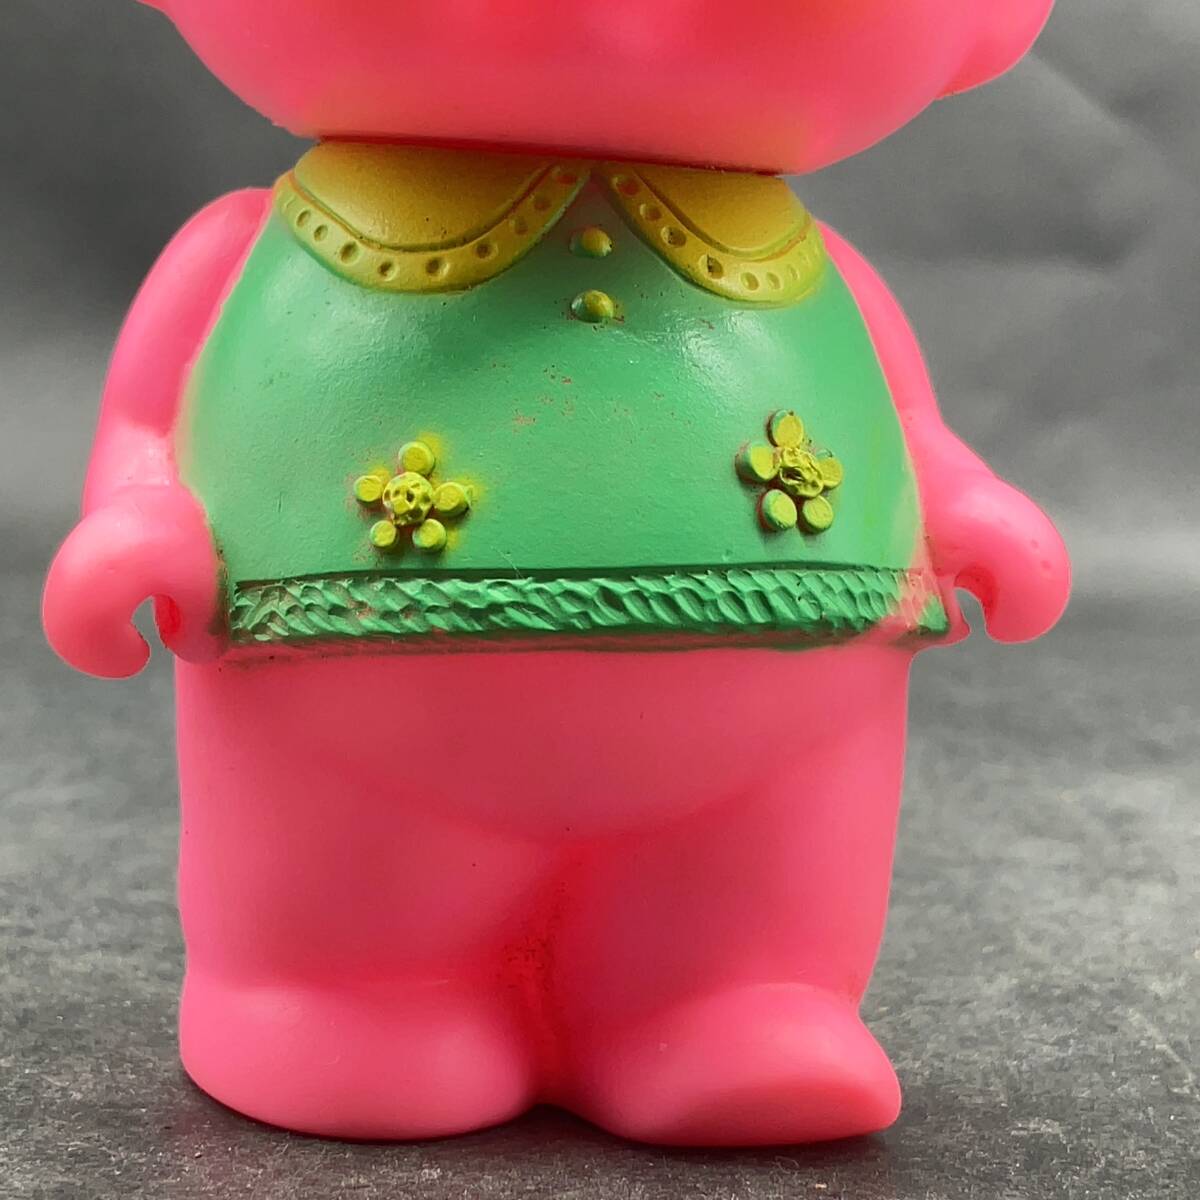 c-78453 昭和レトロ MS ソフビ 人形 キューピーちゃん 全身ピンク 緑の服 笛付き やや汚れあり 現状品 希少品 レア物 時代物の画像8